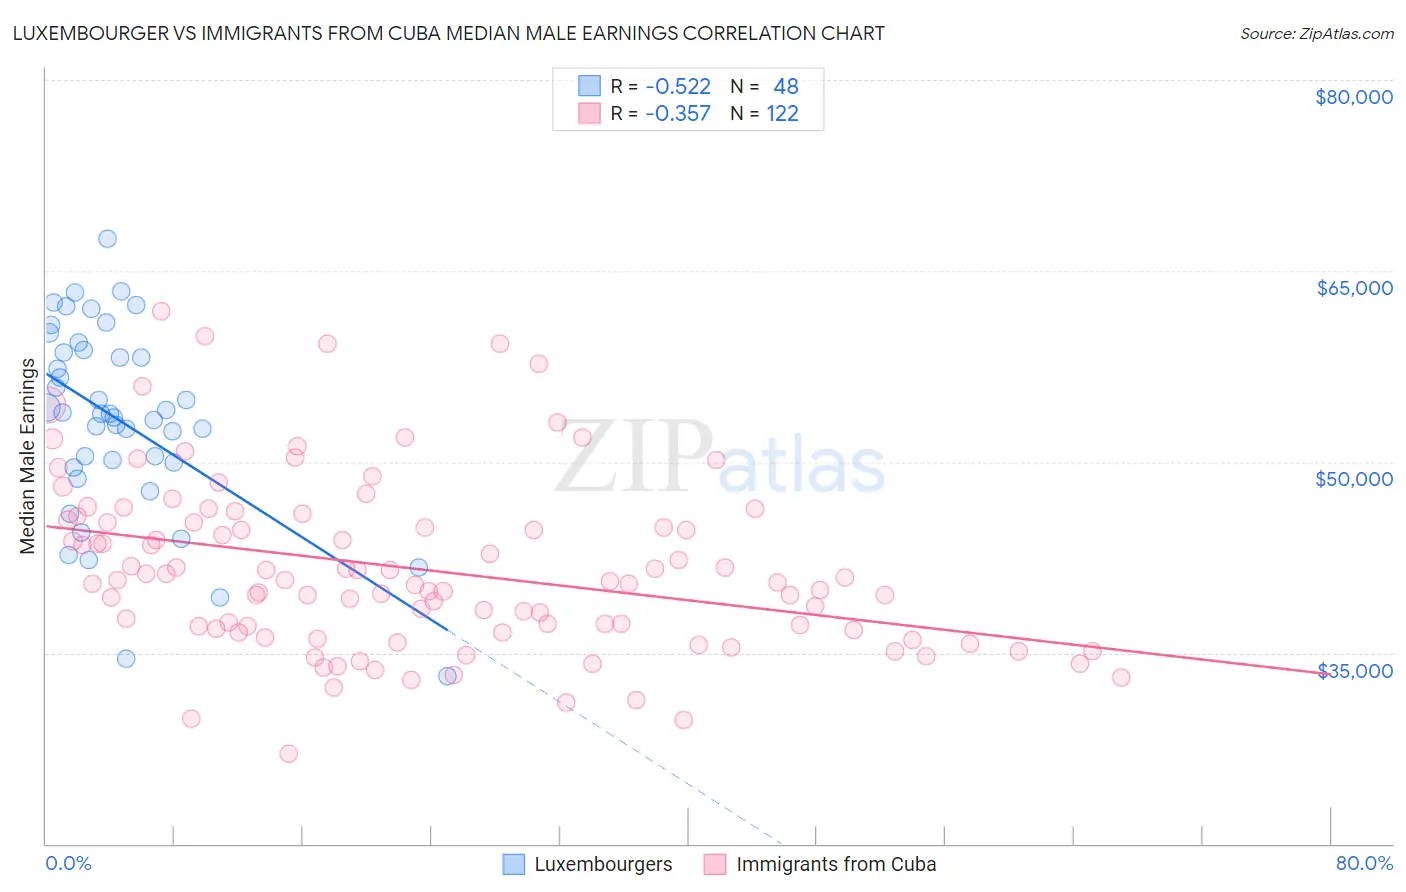 Luxembourger vs Immigrants from Cuba Median Male Earnings